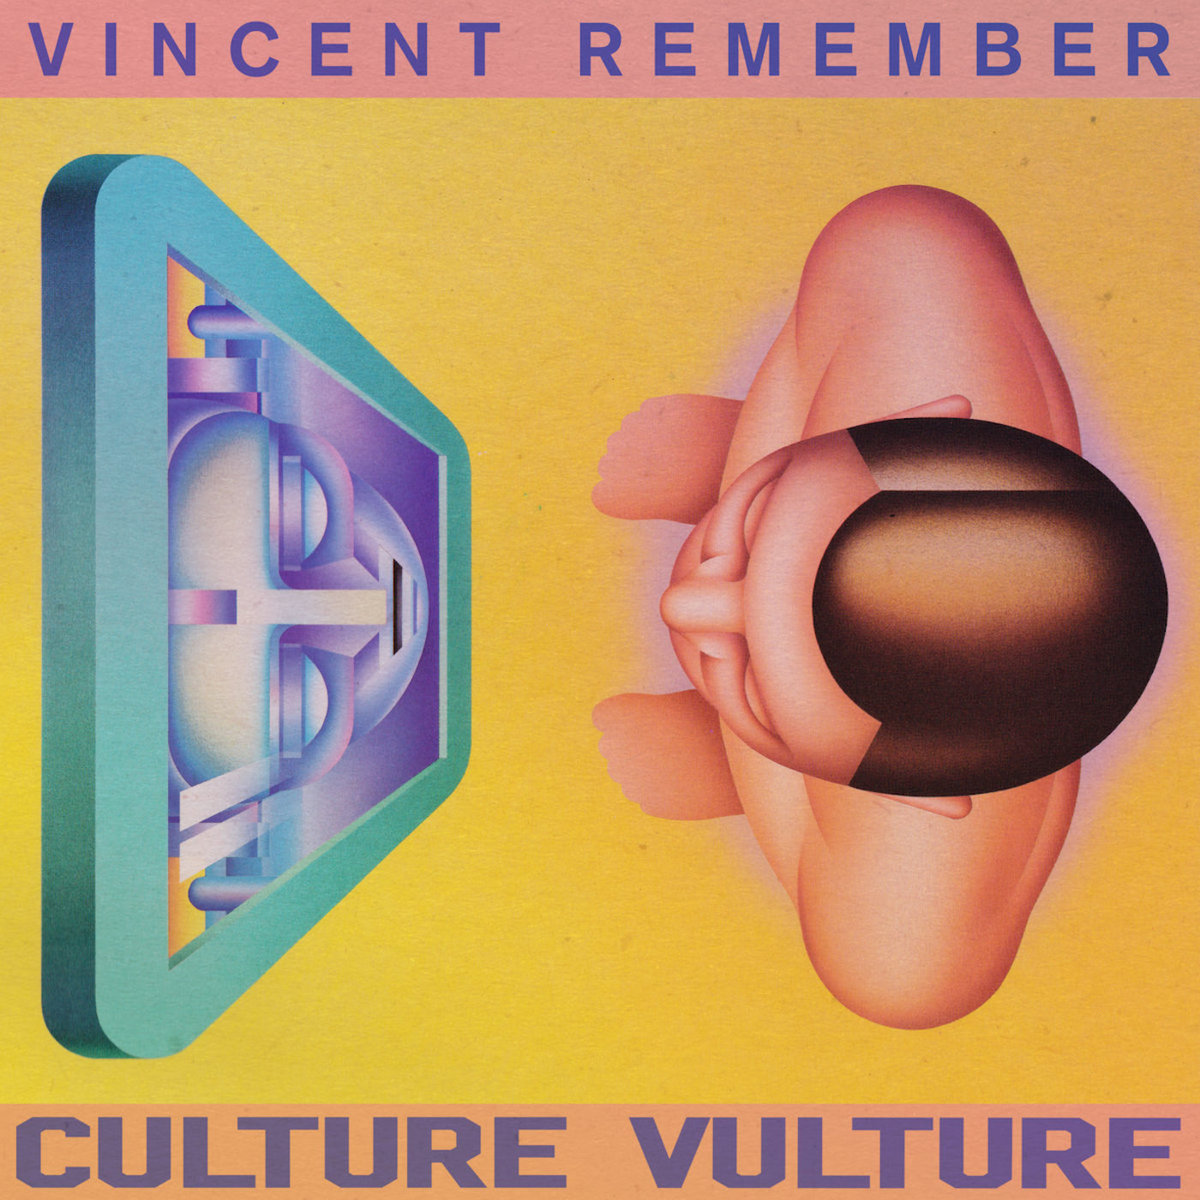 Vincent Remember — The Jam (420 Remix) cover artwork